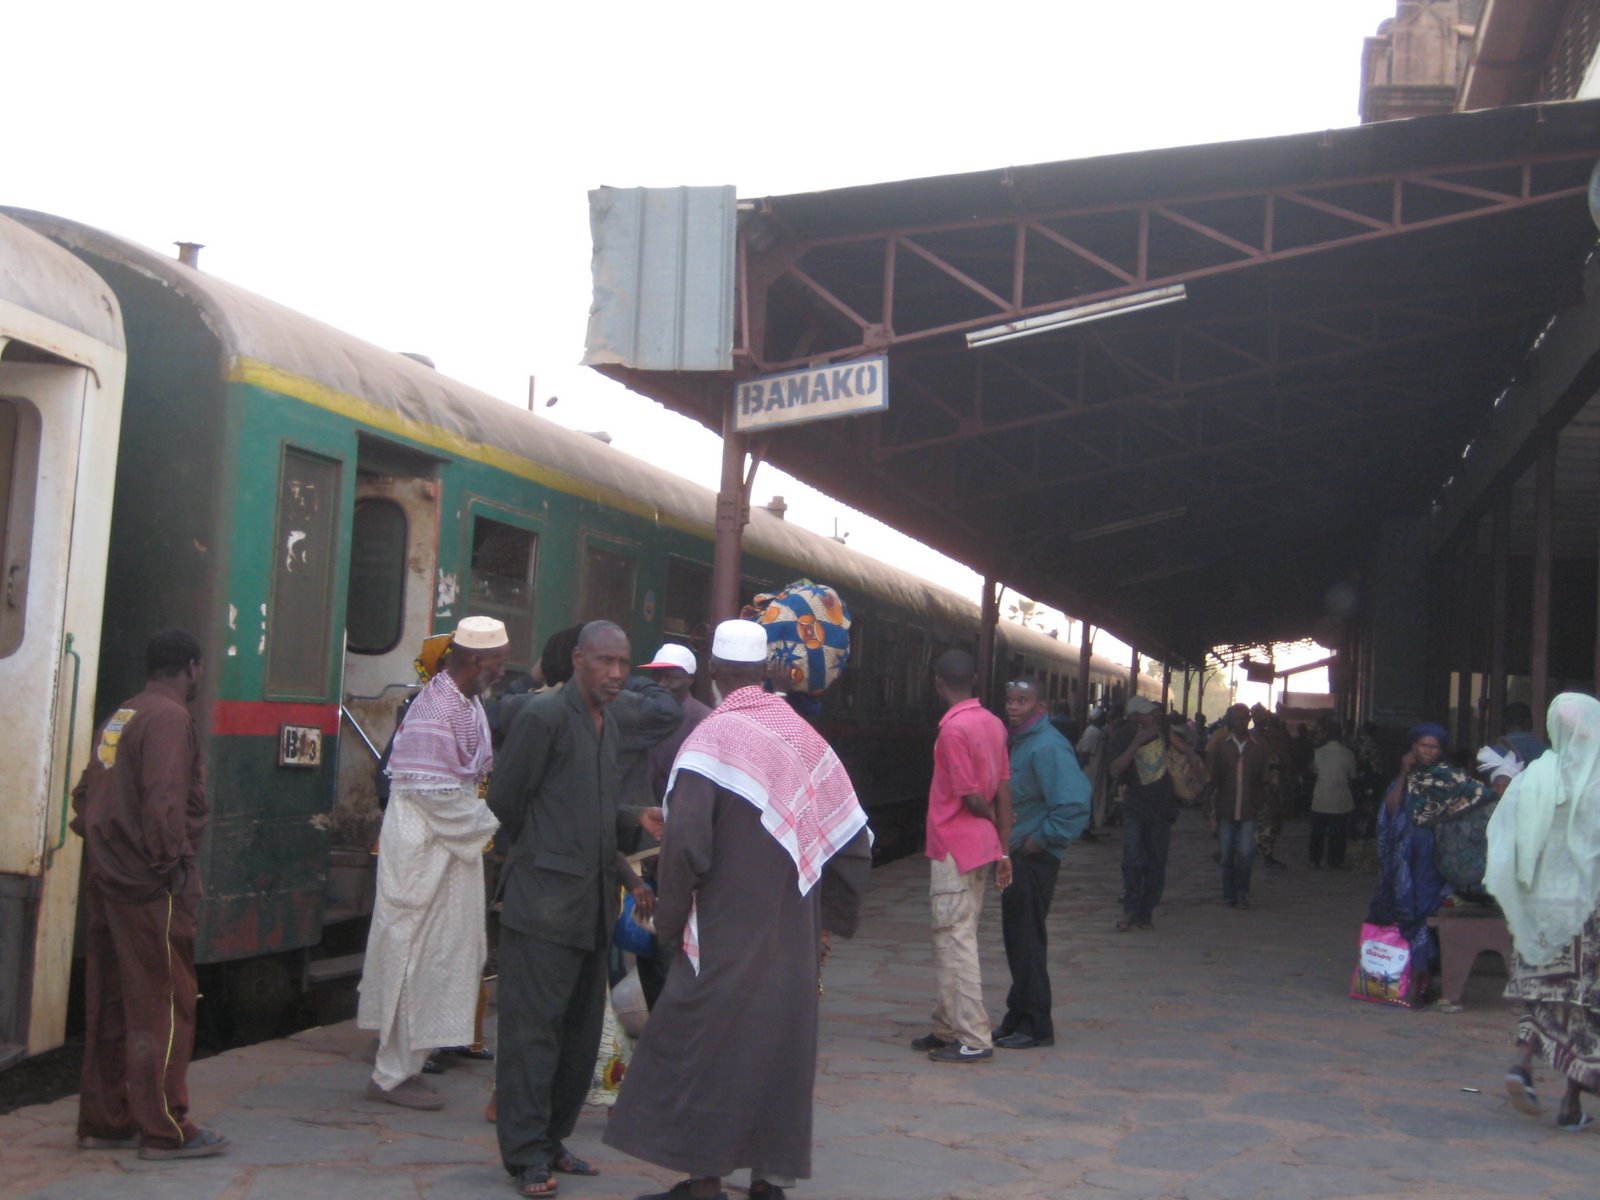 [Bamako+Train+Platform+wide.JPG]